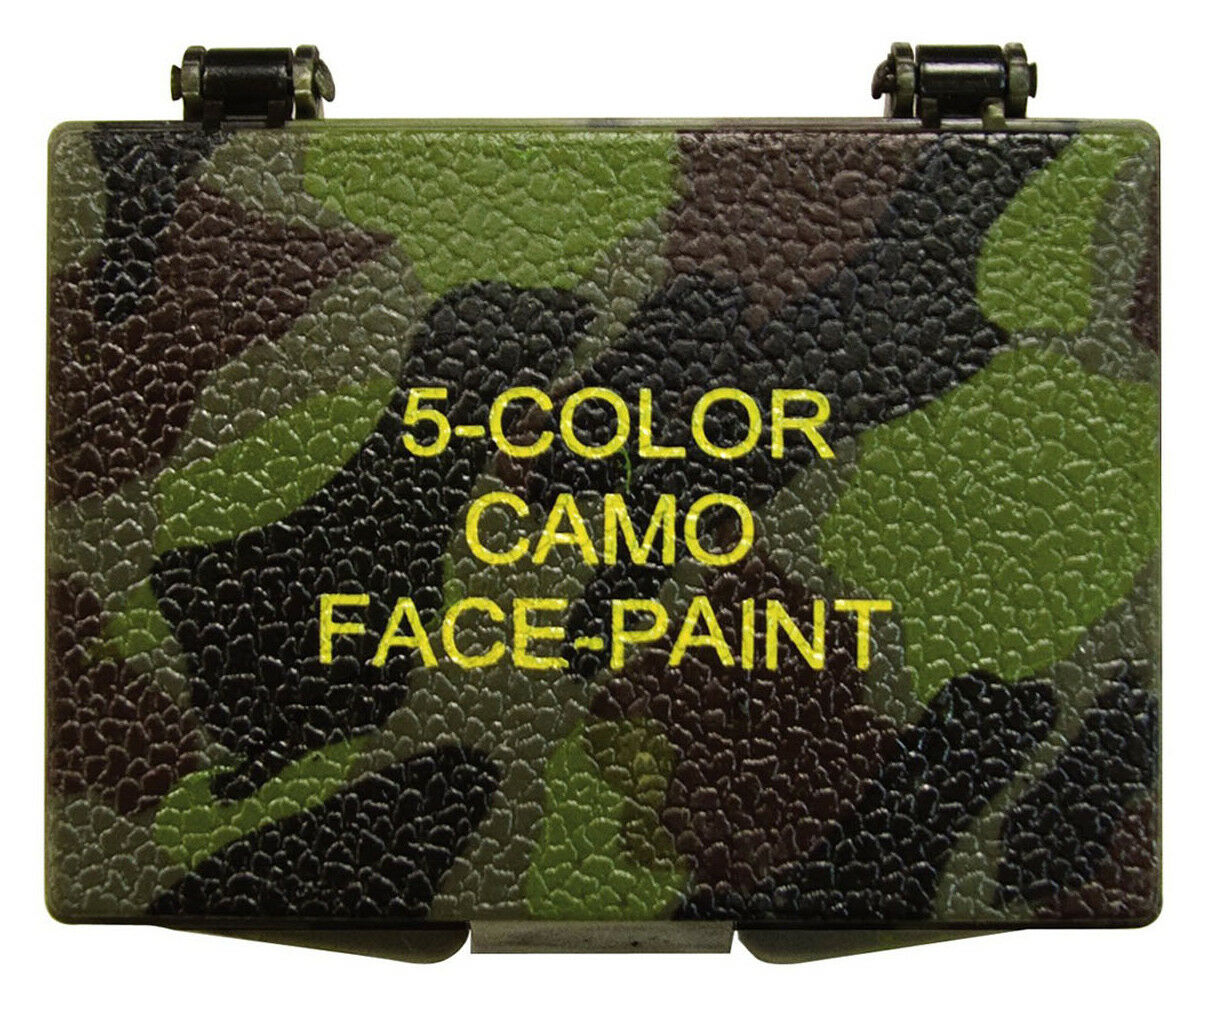 Rothco Woodland / OCP Camo Face Paint Compact Case